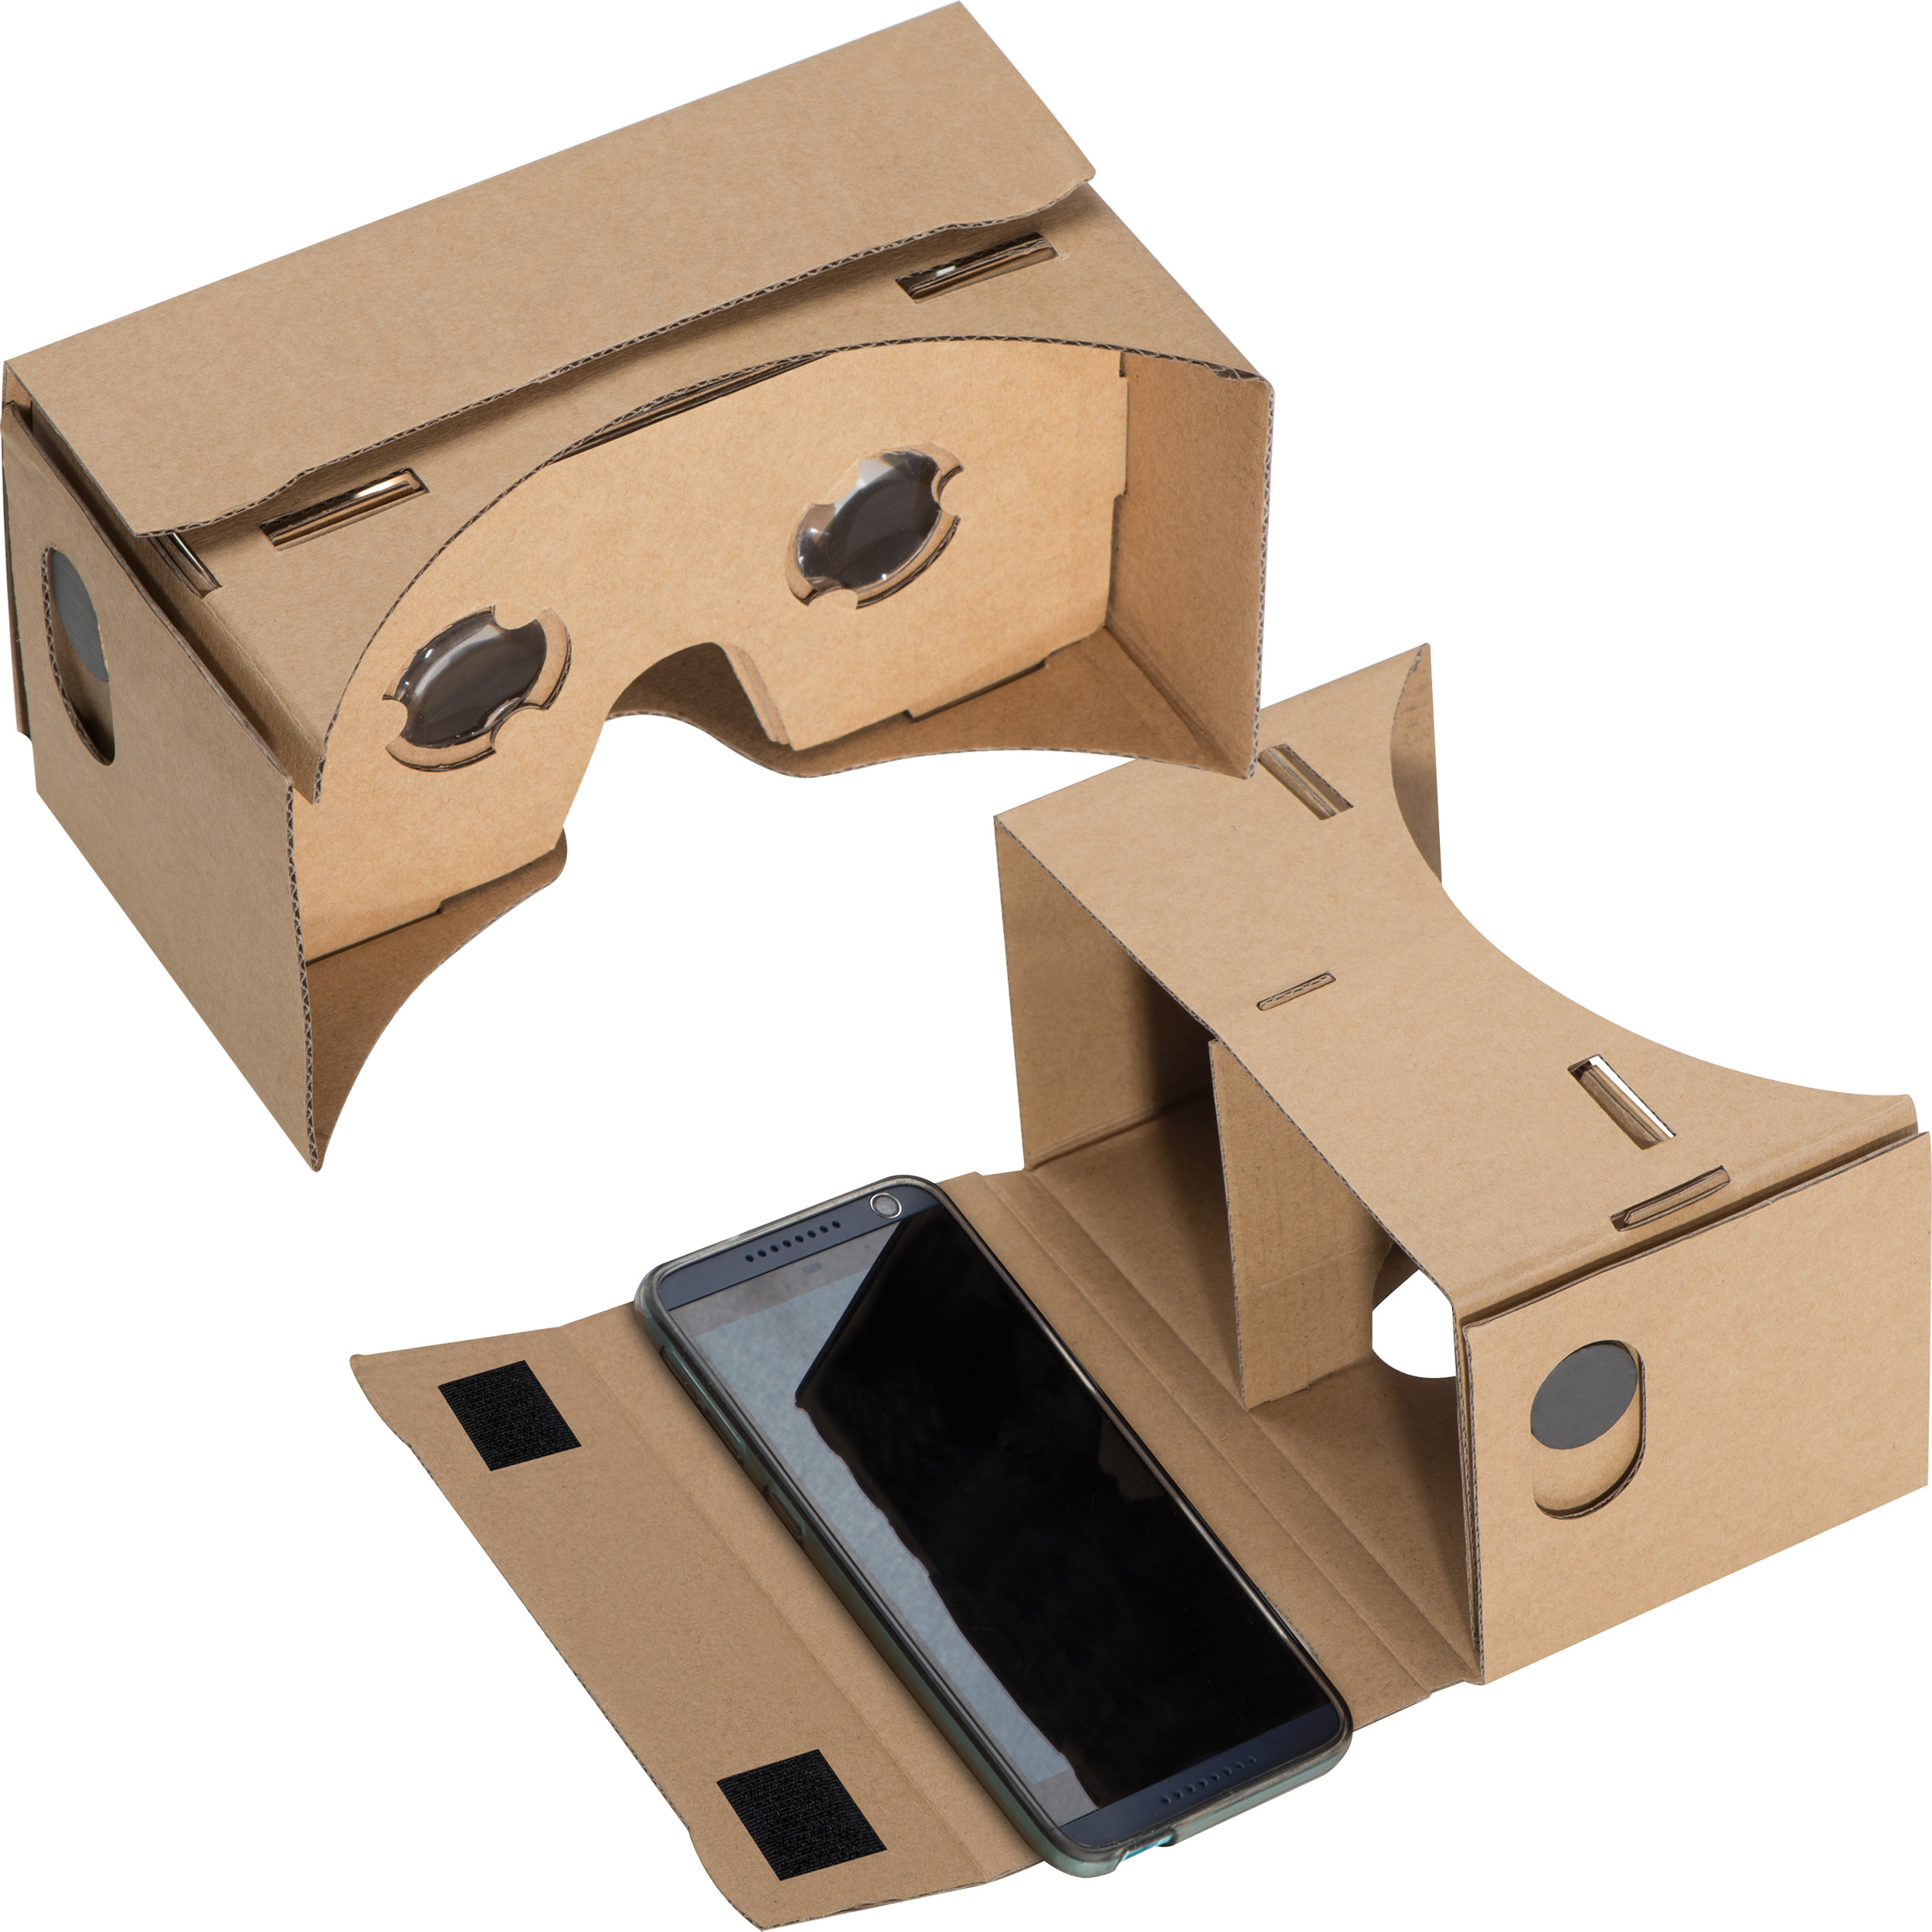 Weymouth Cardboard Virtual Reality - Chagford